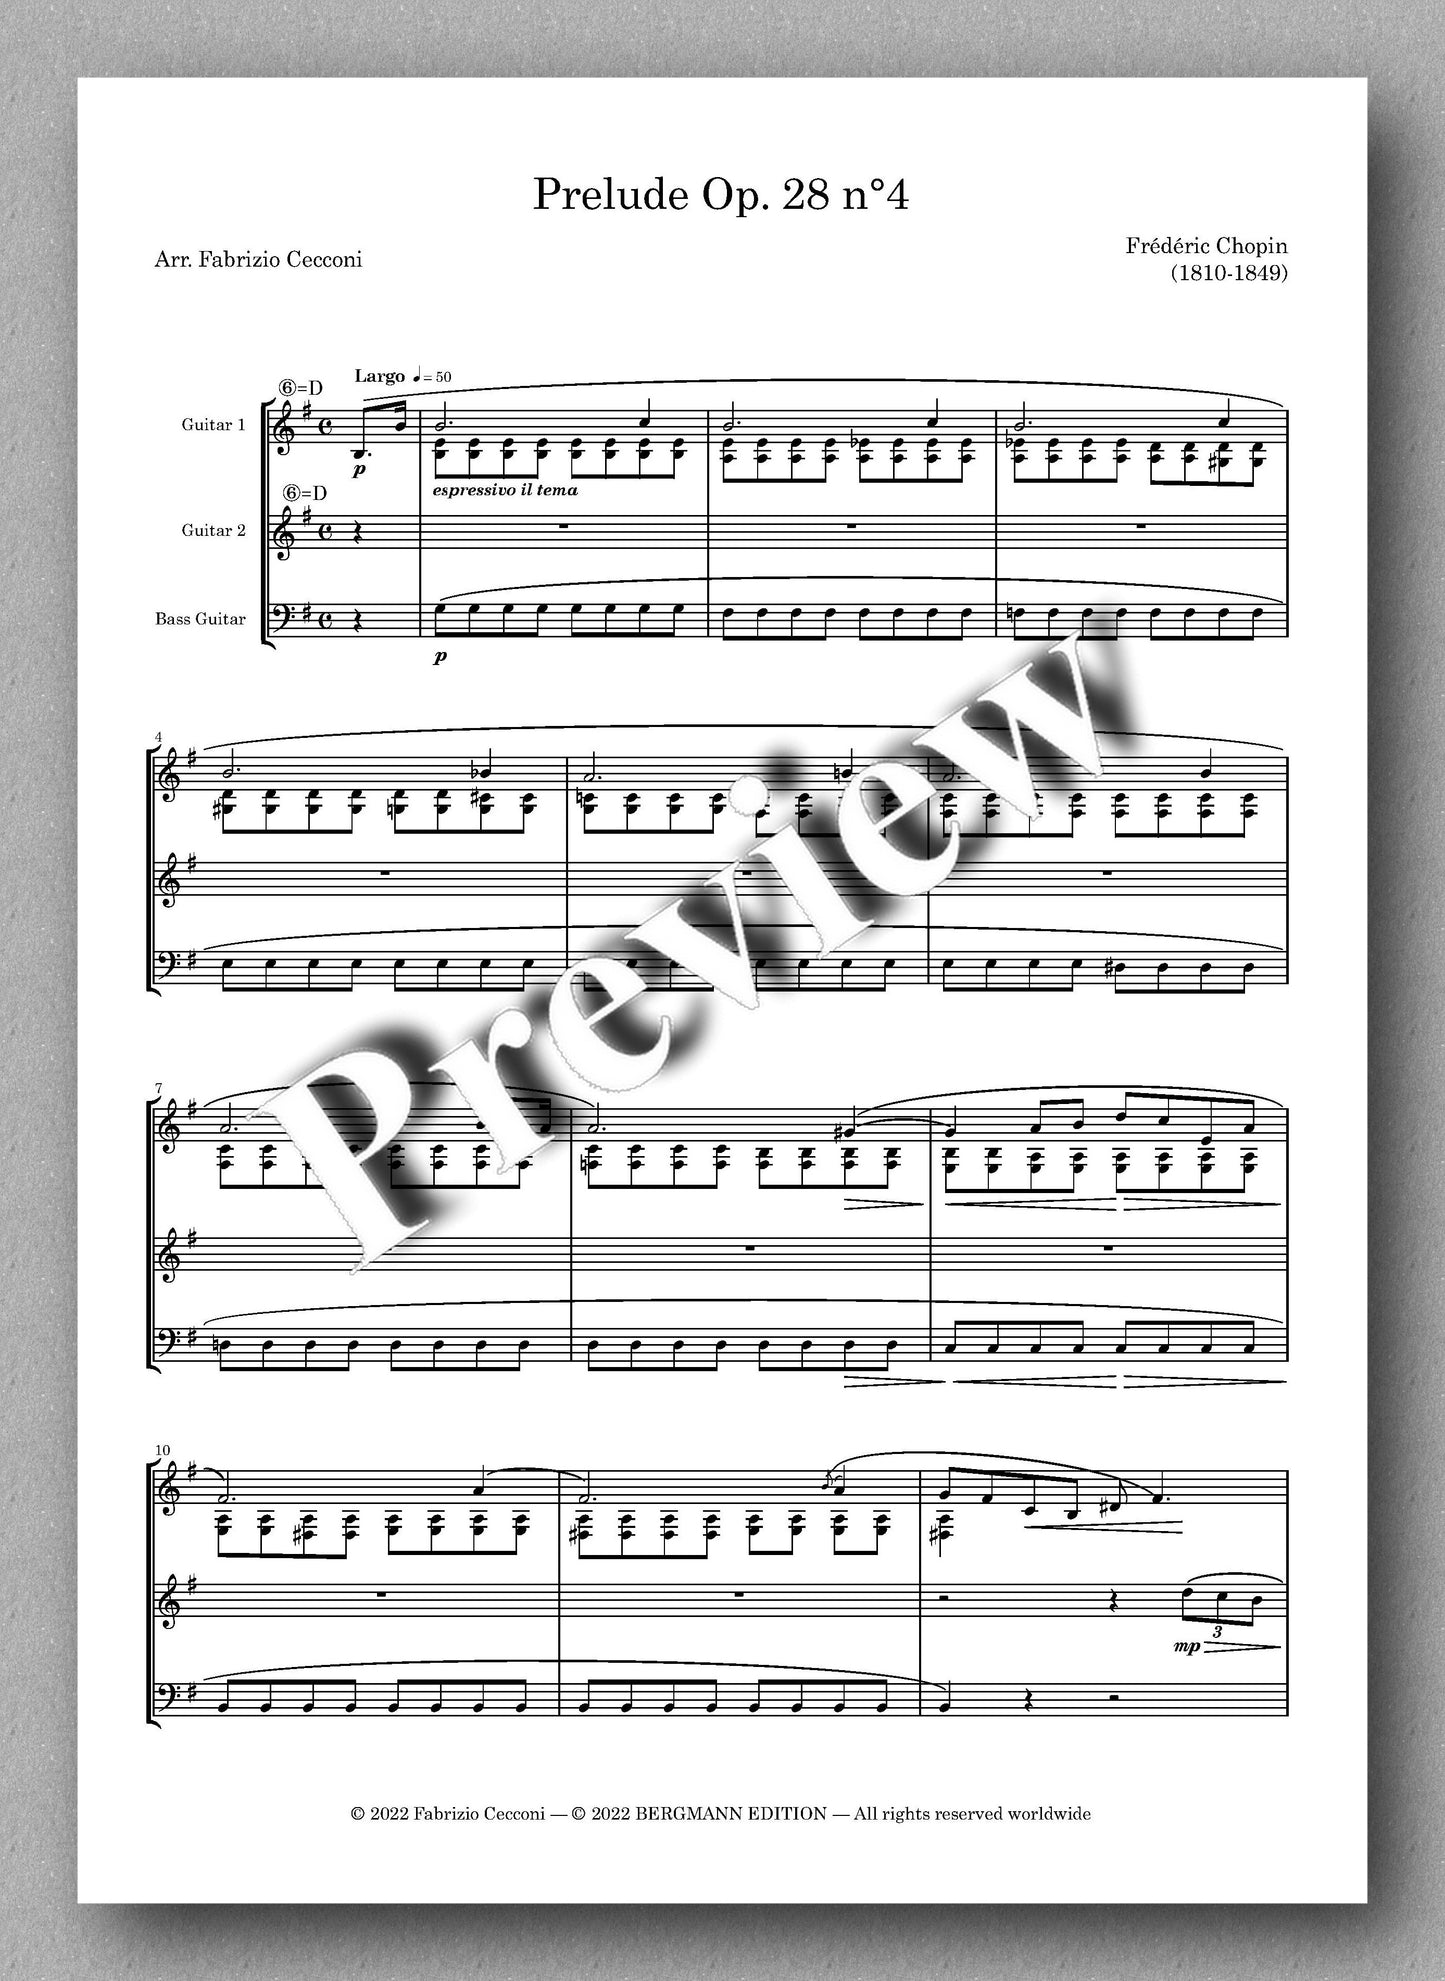 Frédéric Chopin, Prelude Op. 28 n°4 - music score